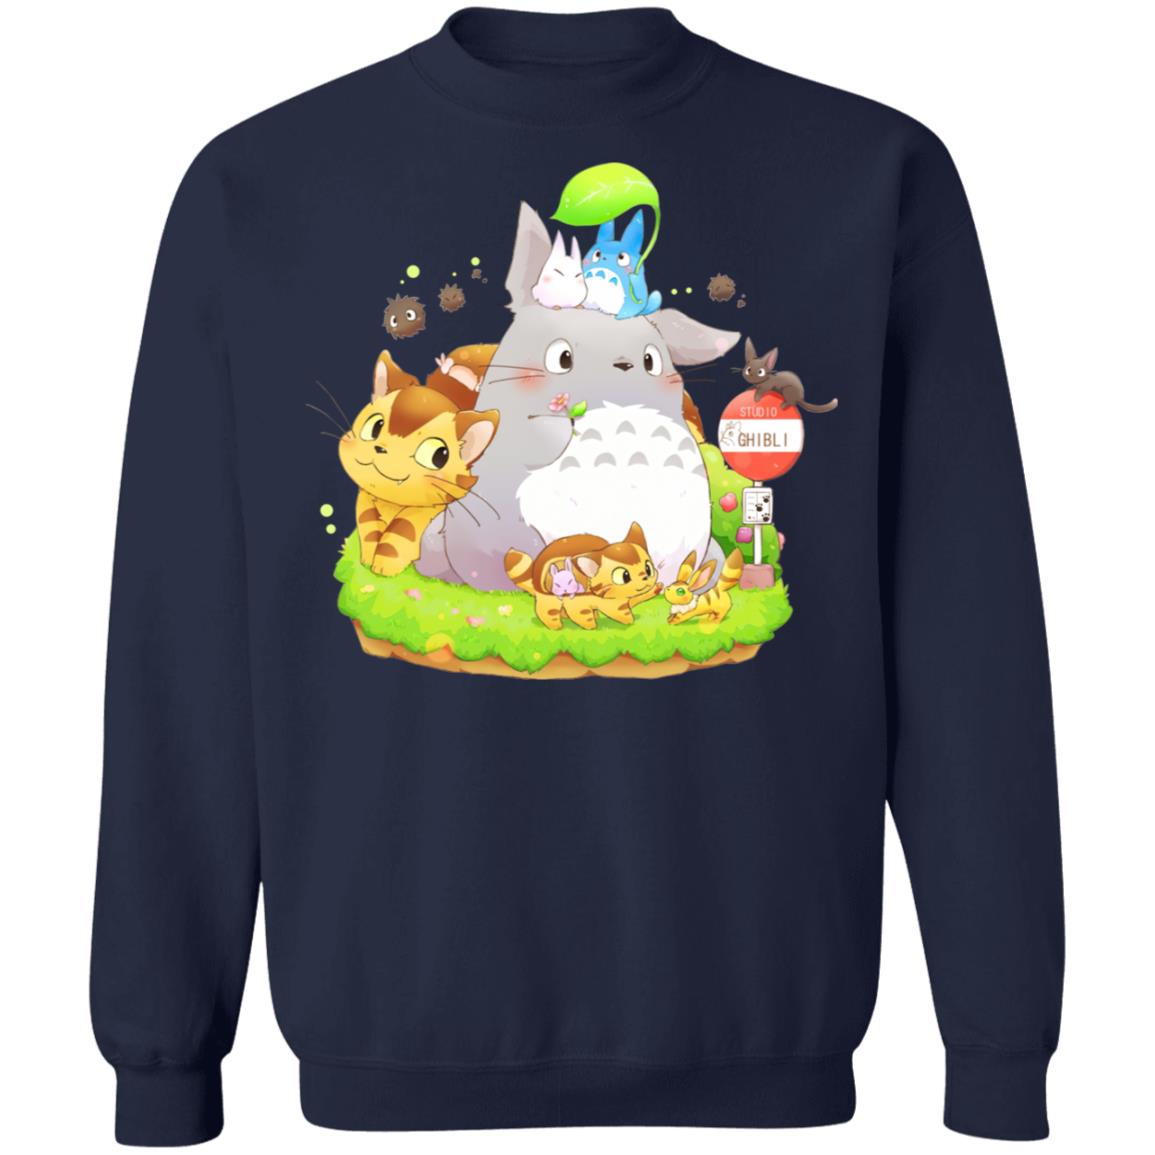 Totoro Family and The Cat Bus Sweatshirt